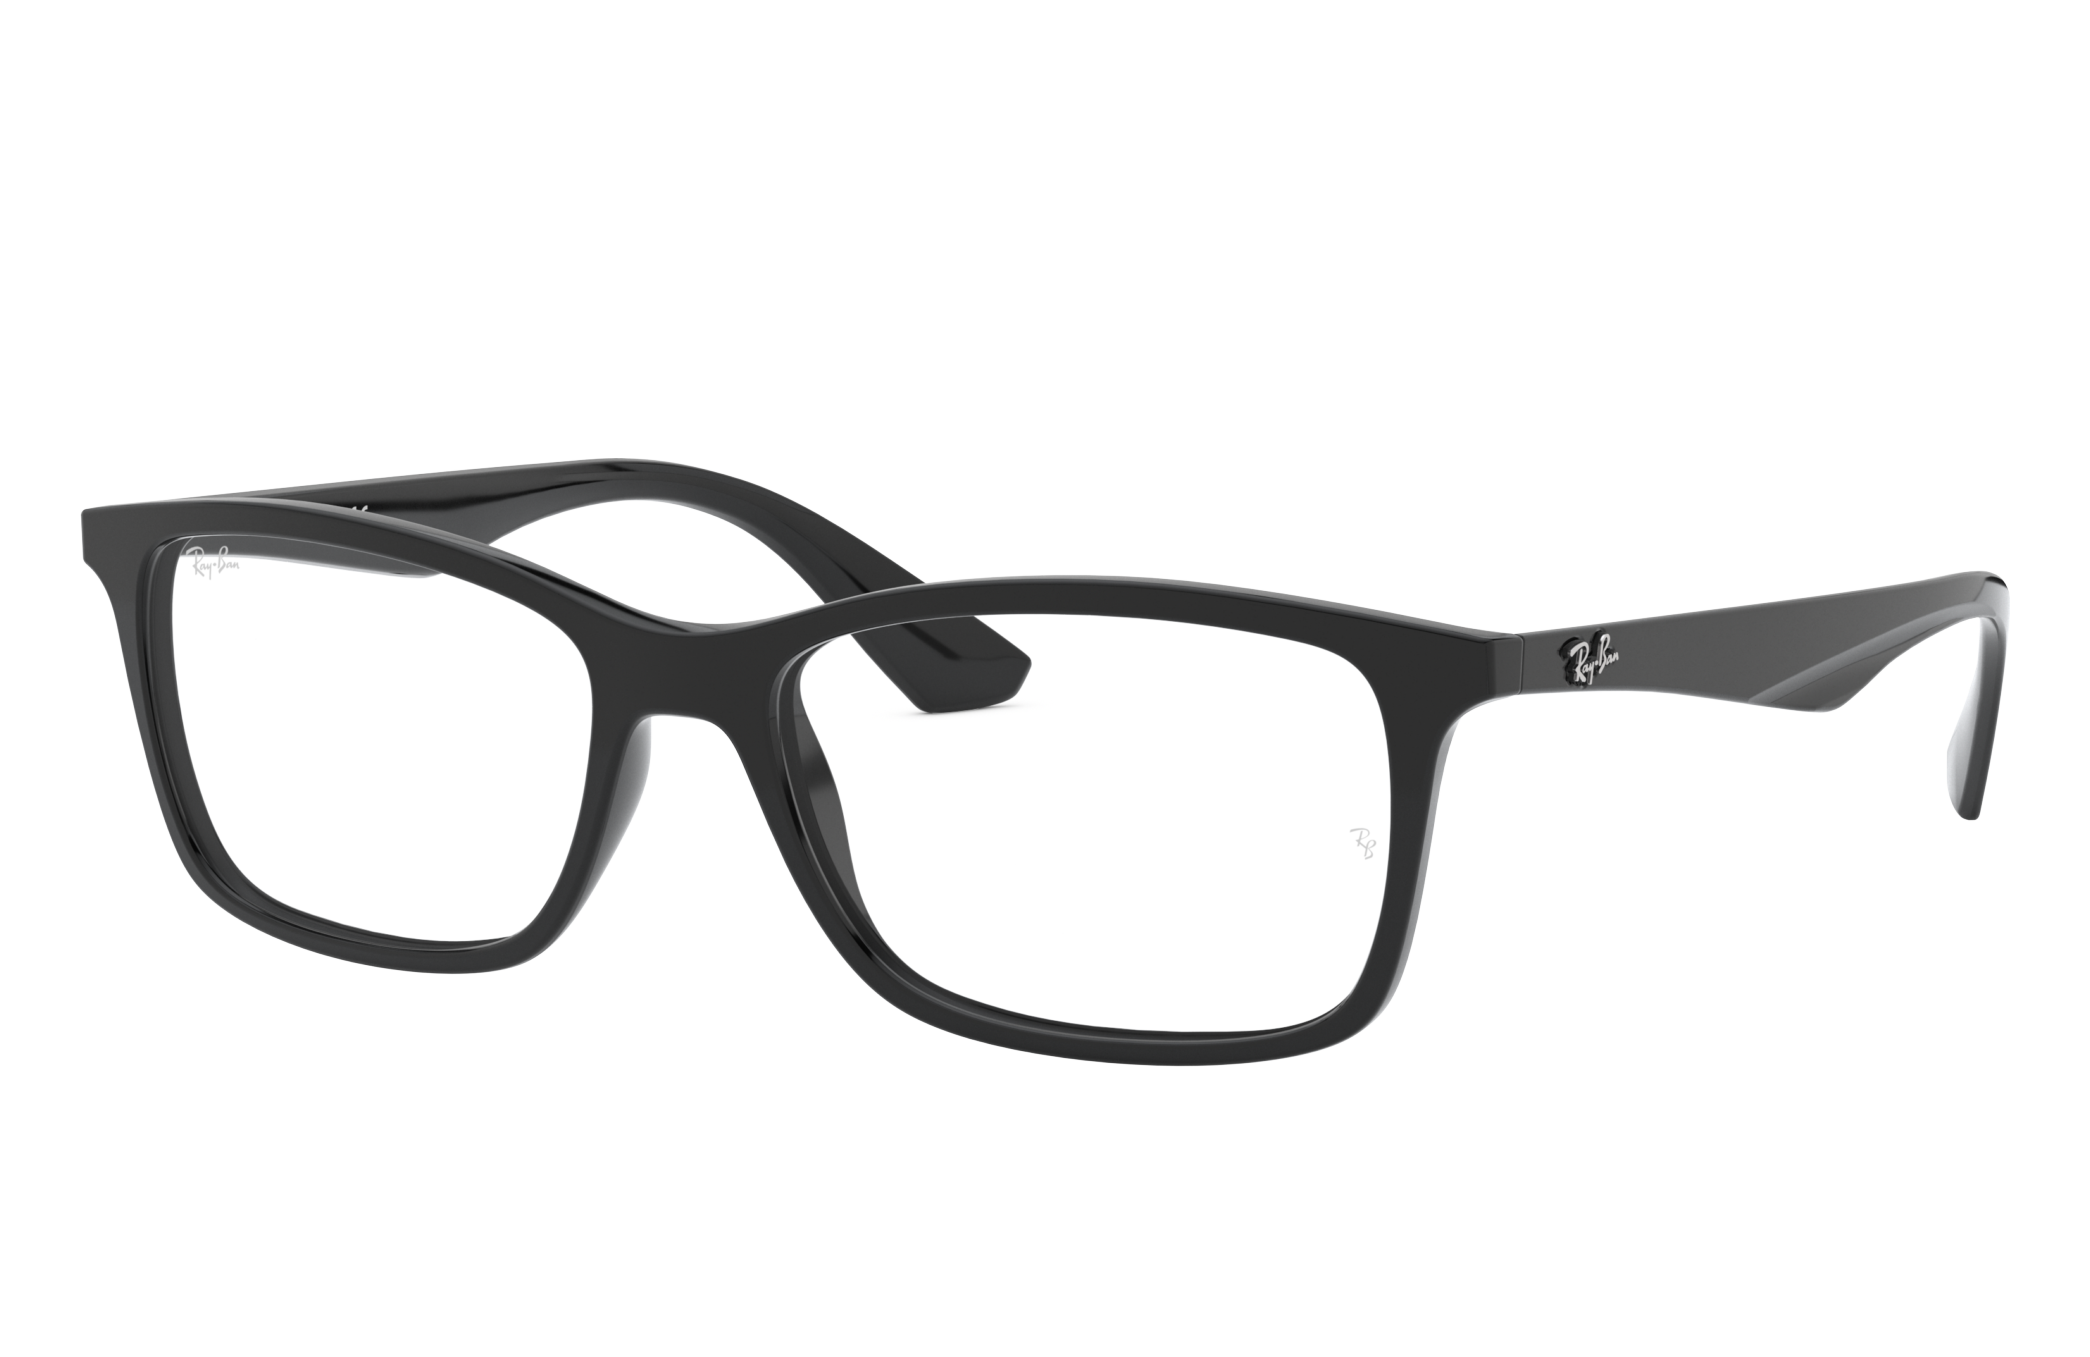 Ray-Ban eyeglasses RB7047 Black - Nylon 